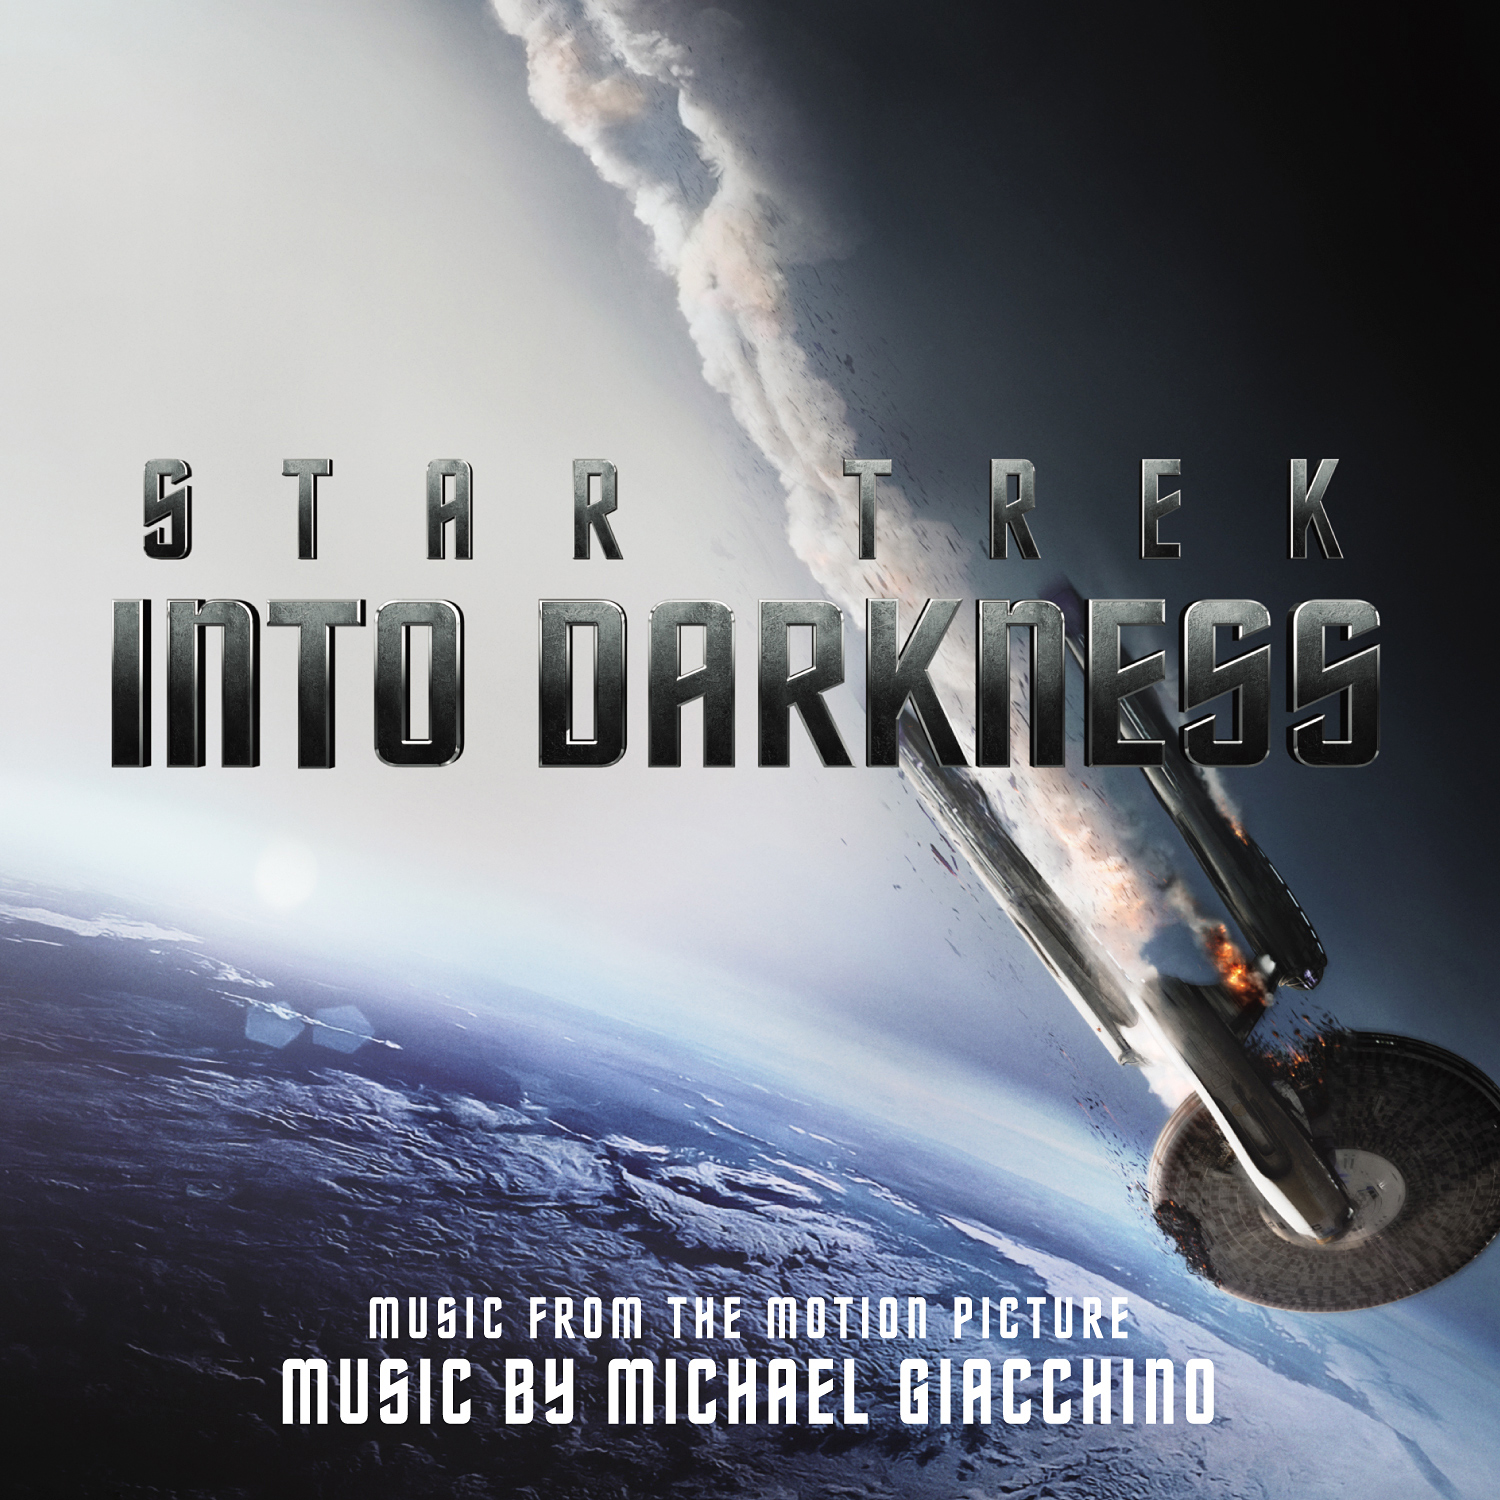 Michael Giacchino - Star Trek: Into Darkness (2013) [HDTracks FLAC 24bit/96kHz]